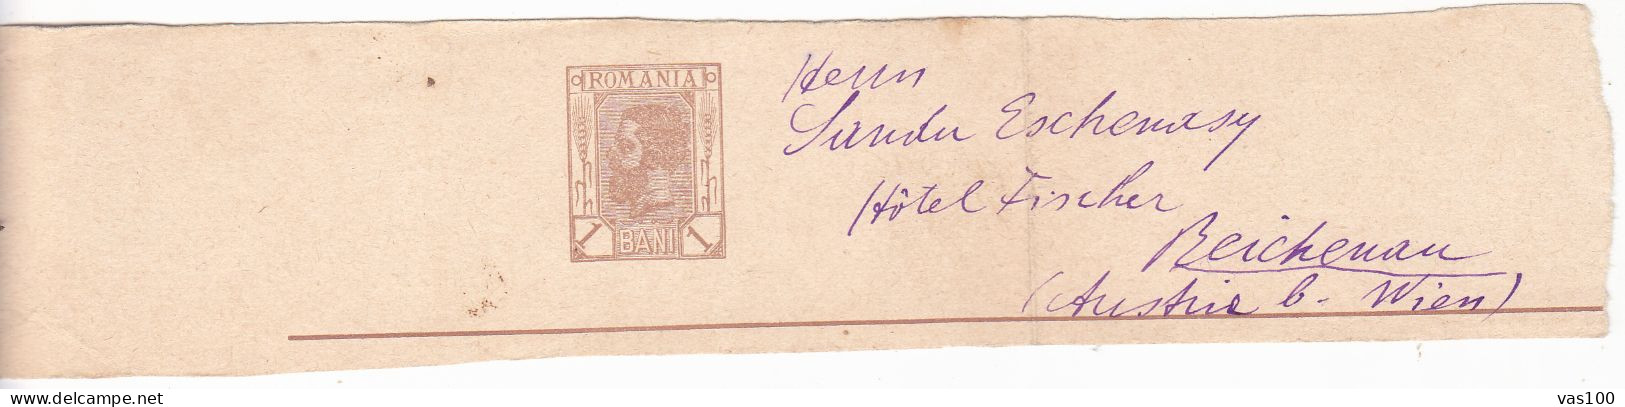 ROMANIA ROMÂNIA POSTAL STATIONERY,BAND NEWSPAPER WRAPPER 1900! - Covers & Documents